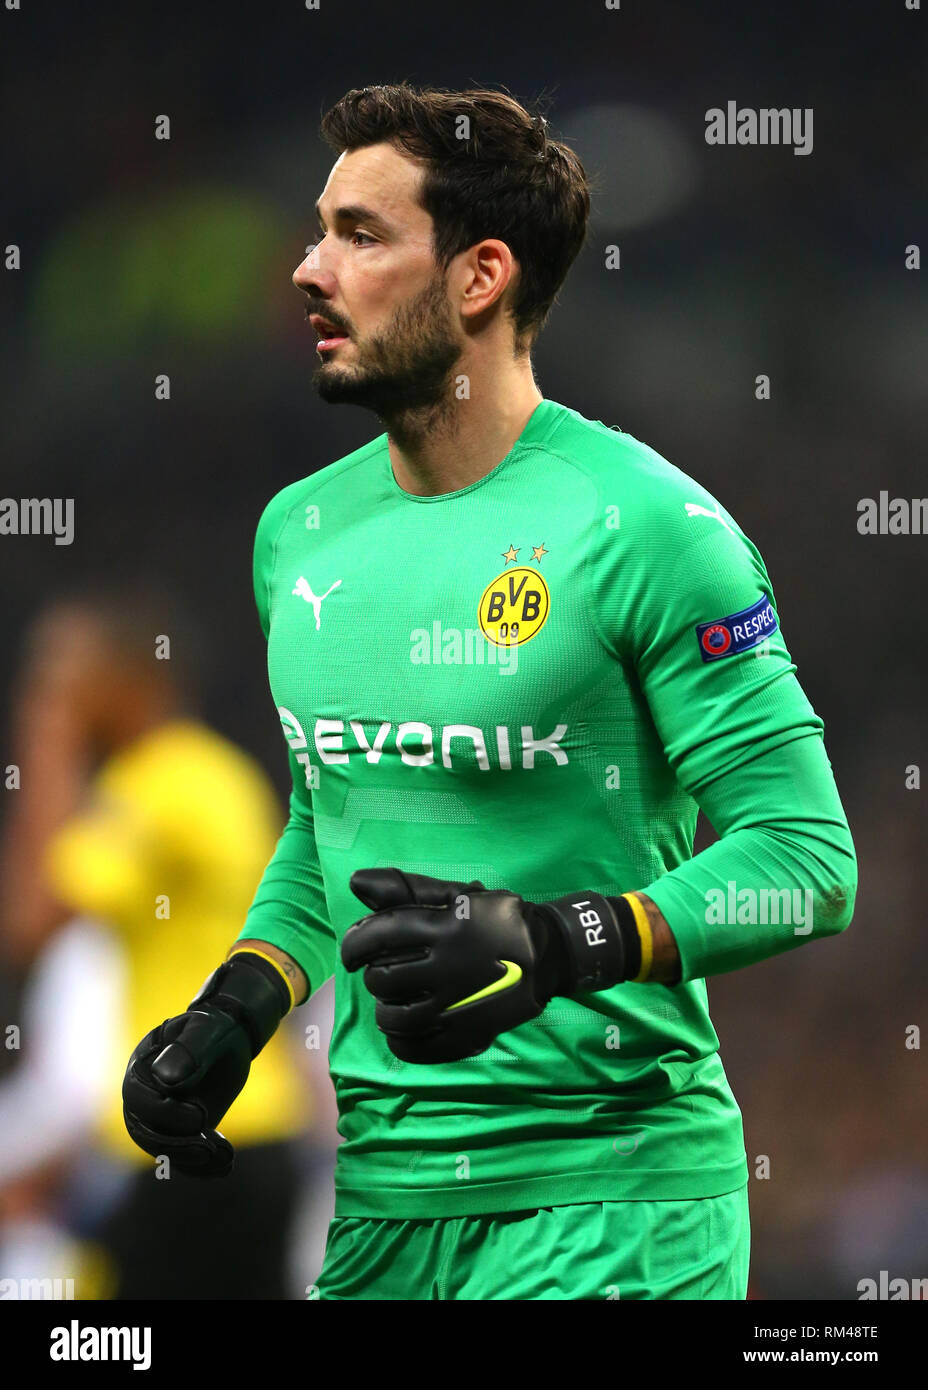 Borussia dortmund goalkeeper hi-res stock photography and images - Alamy